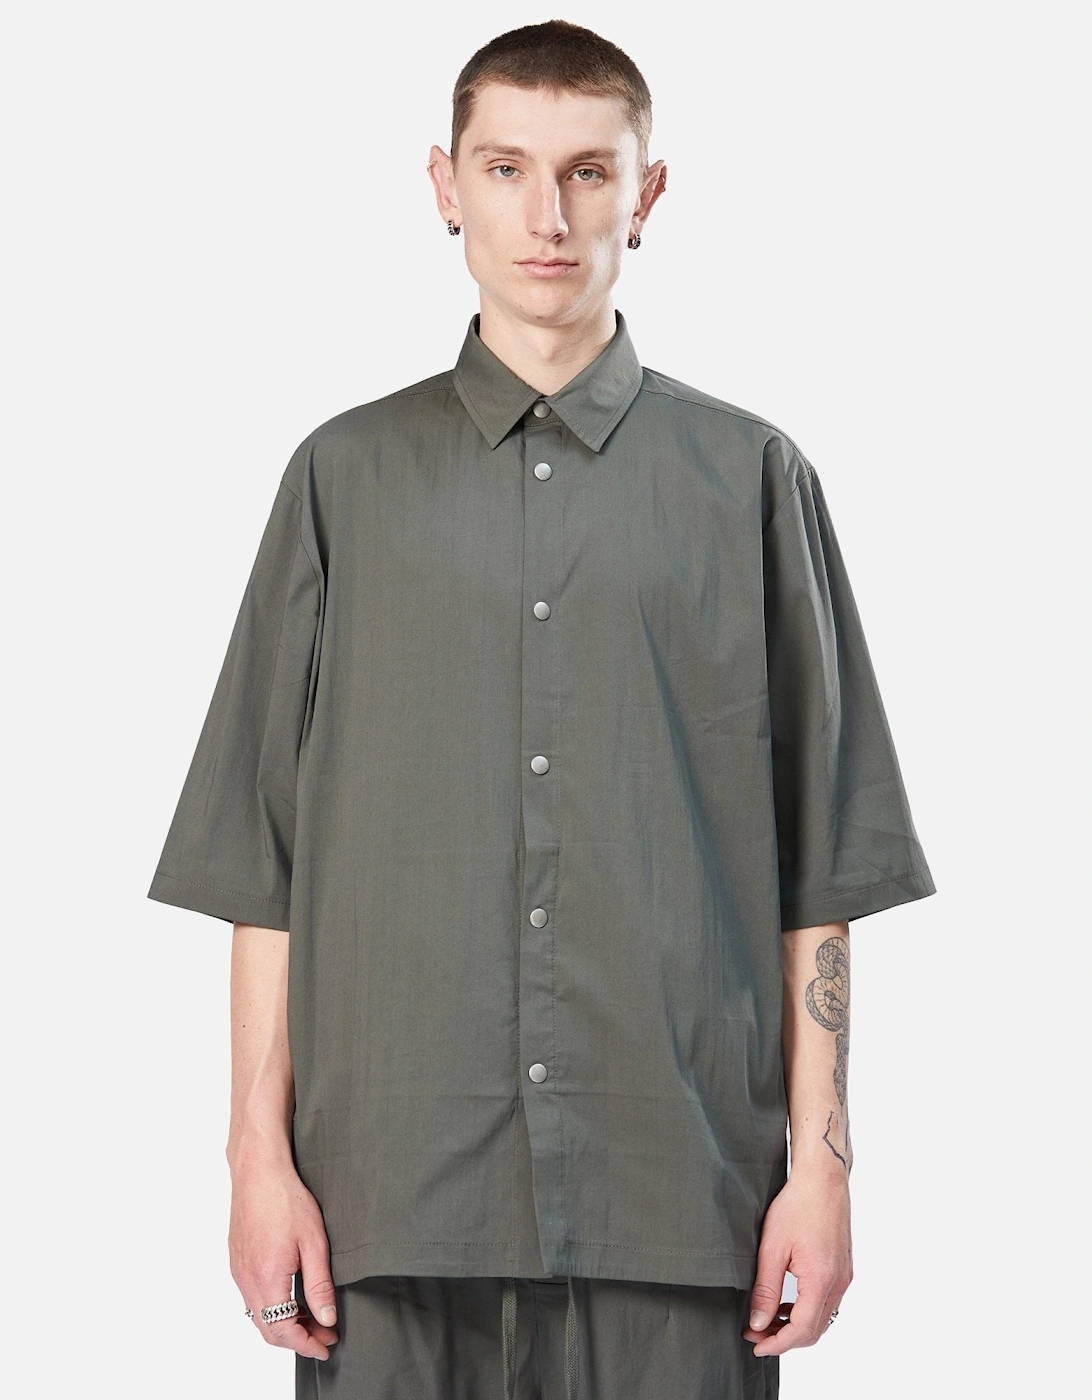 Oversizes SS Side Pocket Green Shirt